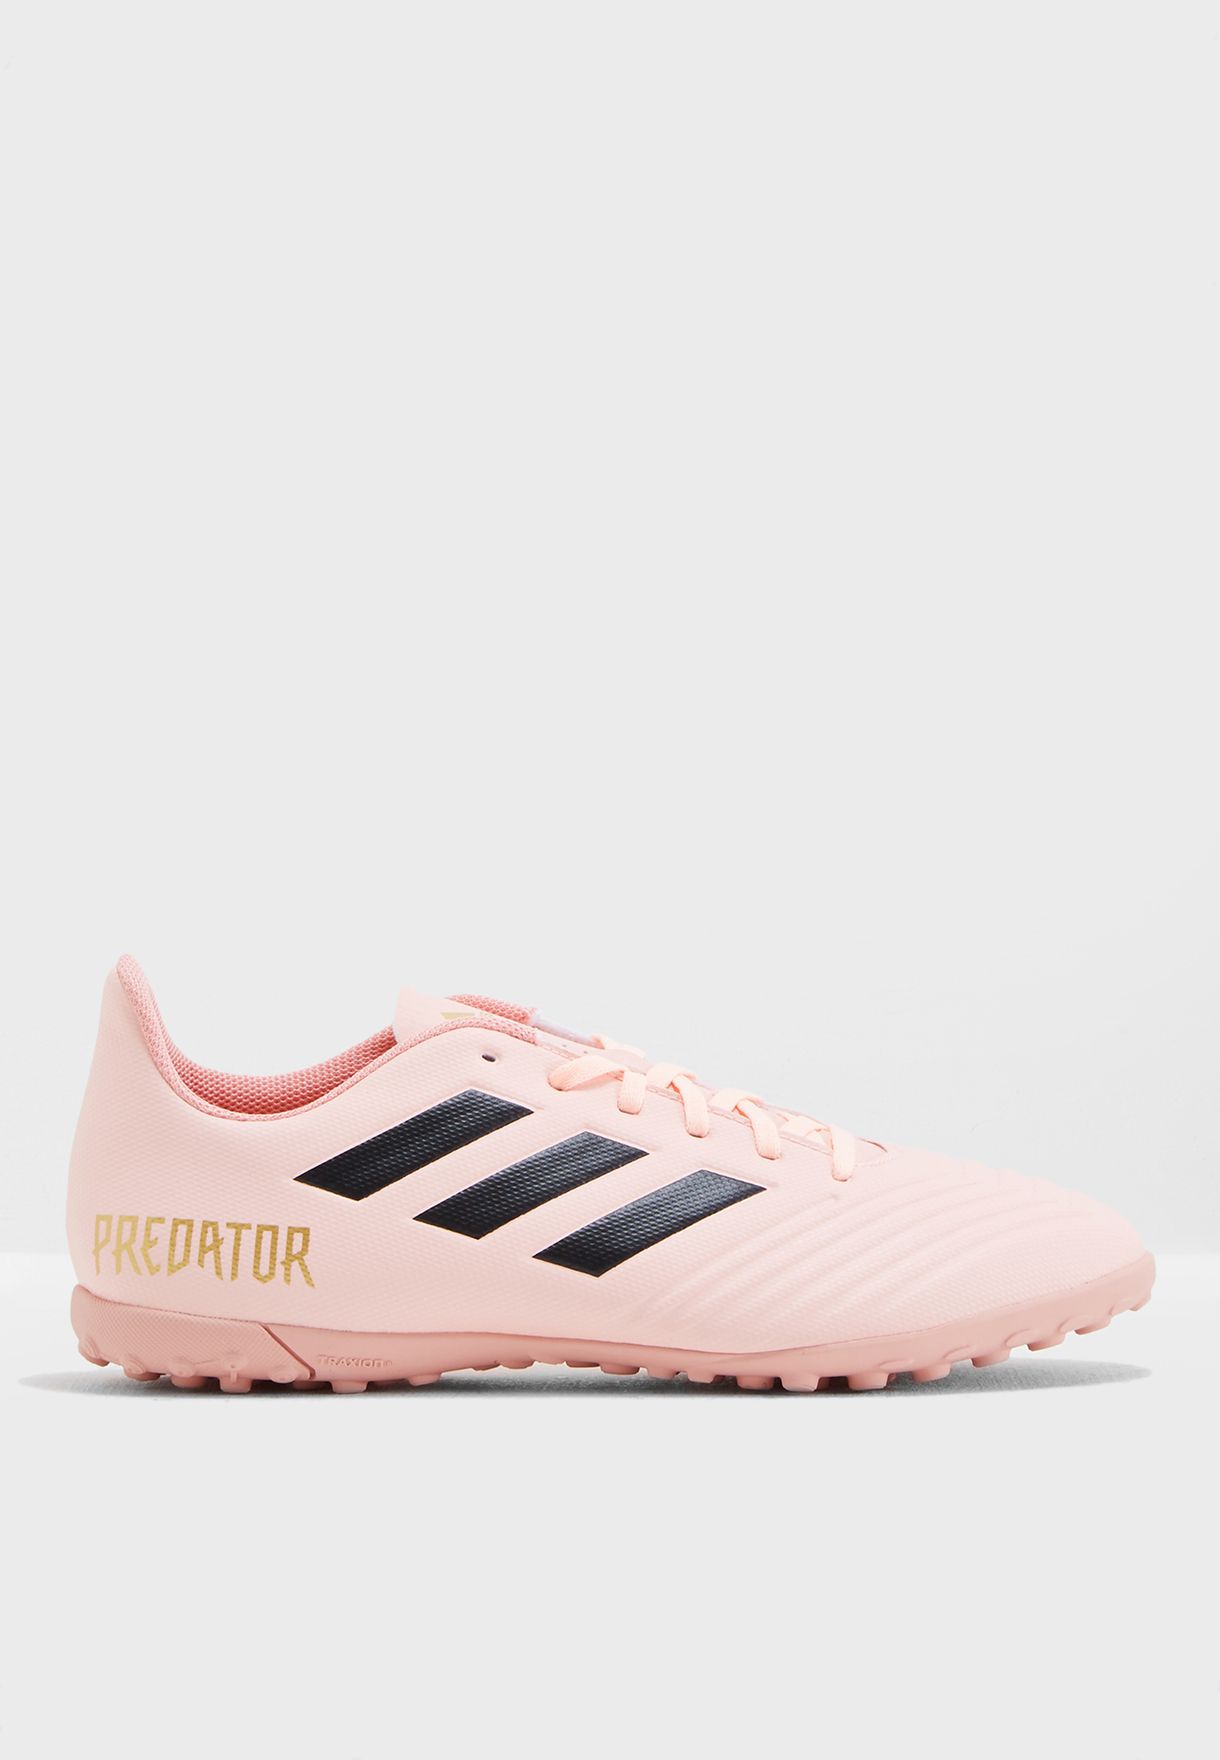 adidas predator pink mens